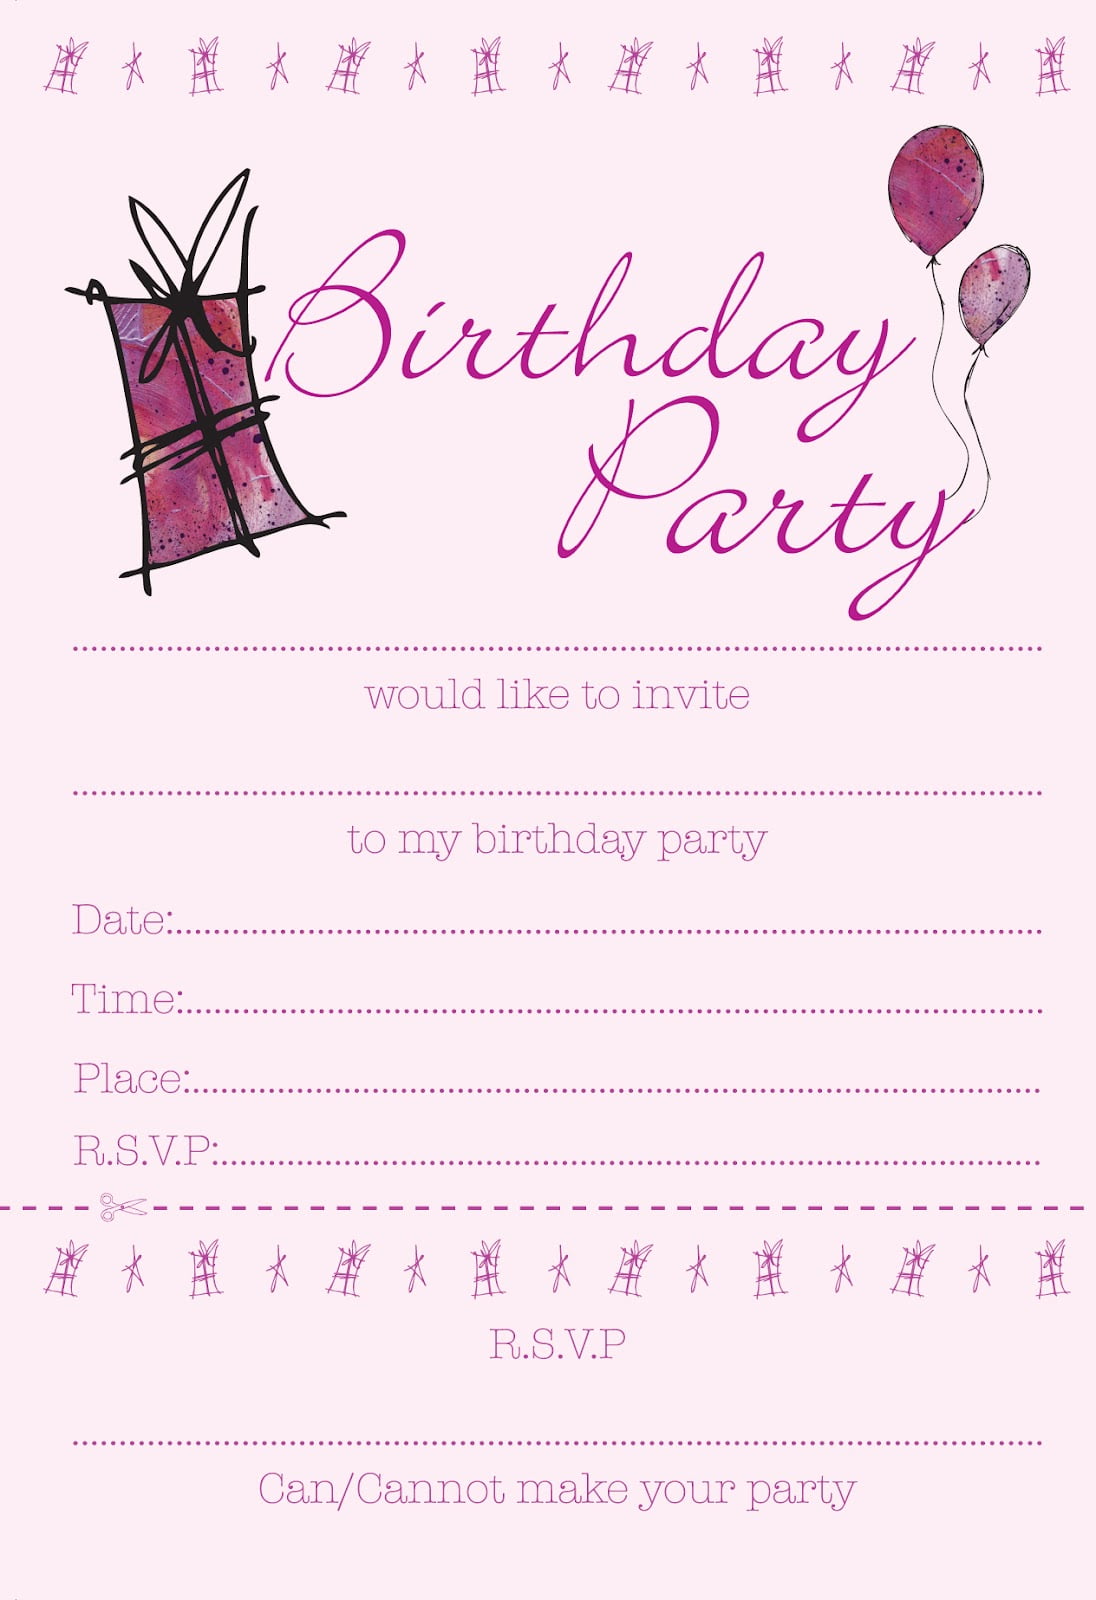 Free Birthday Party Invitations for Girl | FREE Printable Birthday